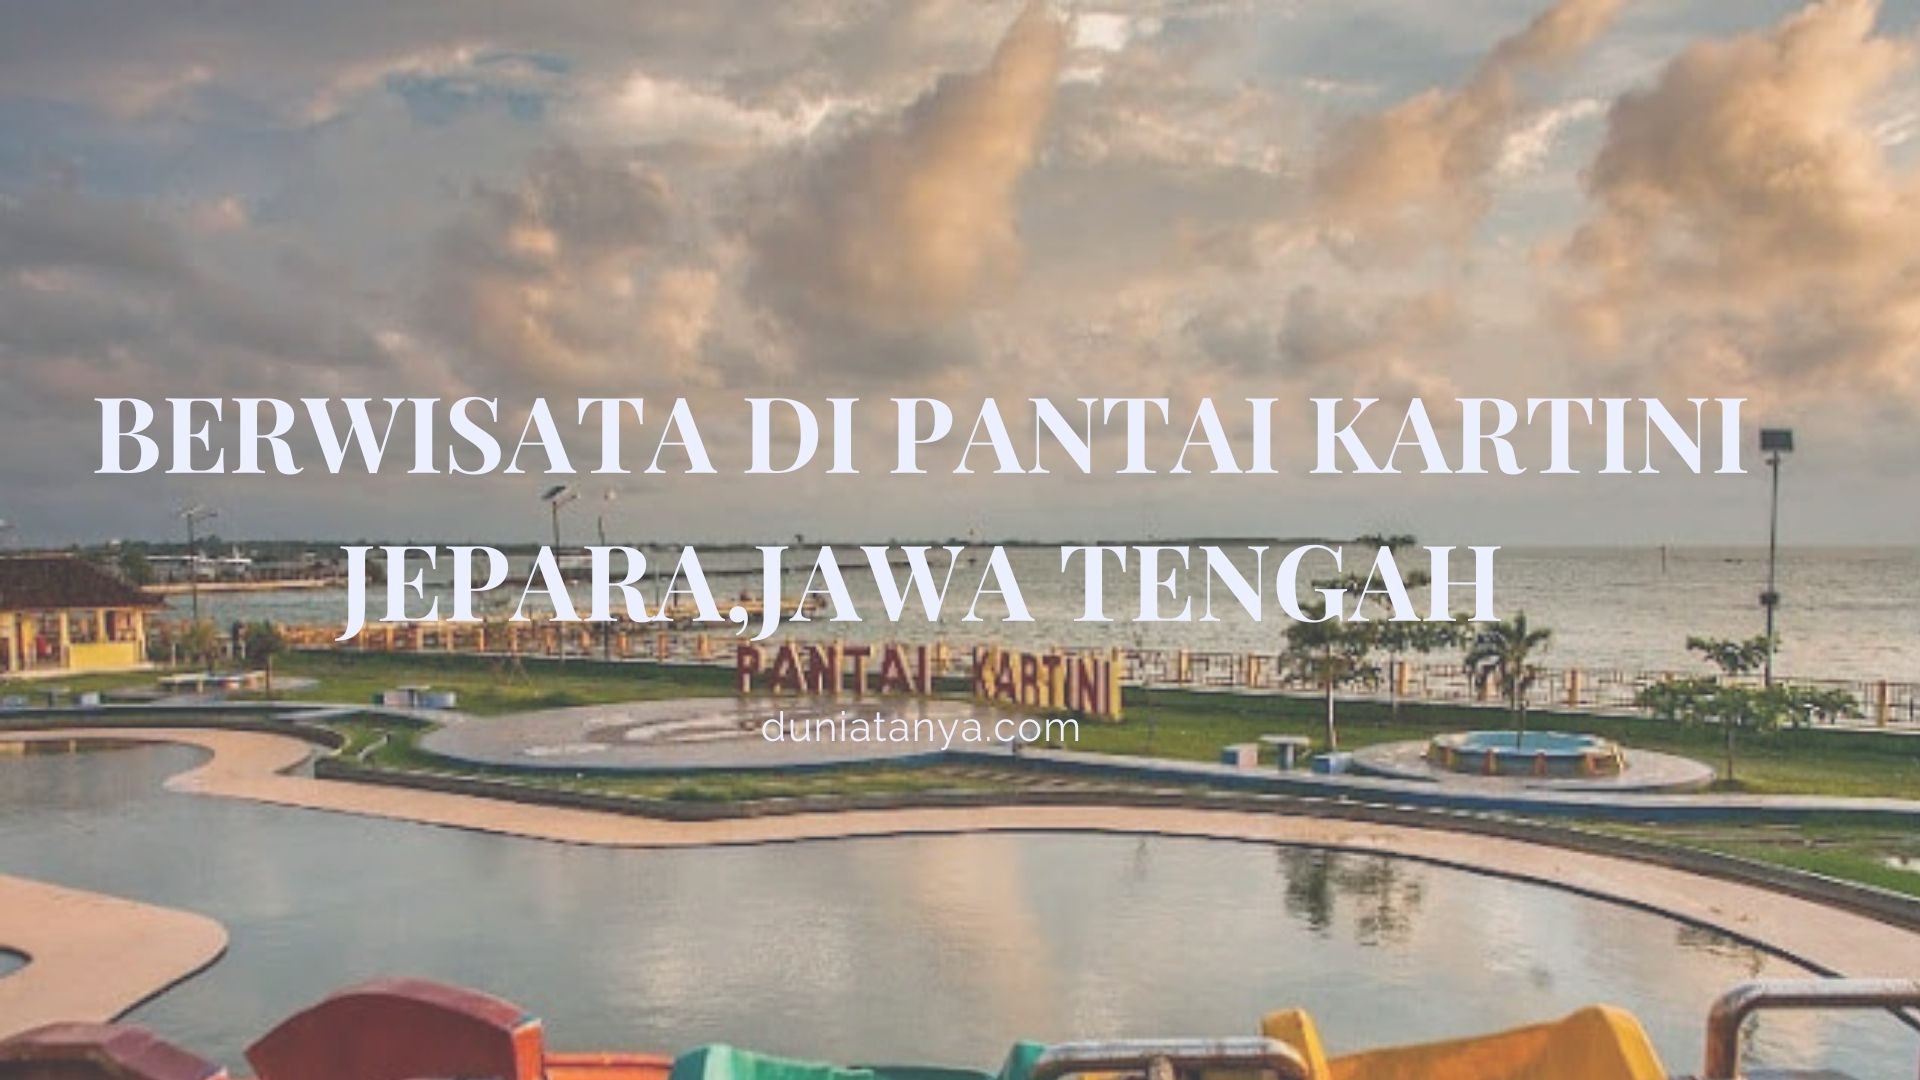 You are currently viewing Berwisata Di Pantai Kartini Jepara,Jawa Tengah